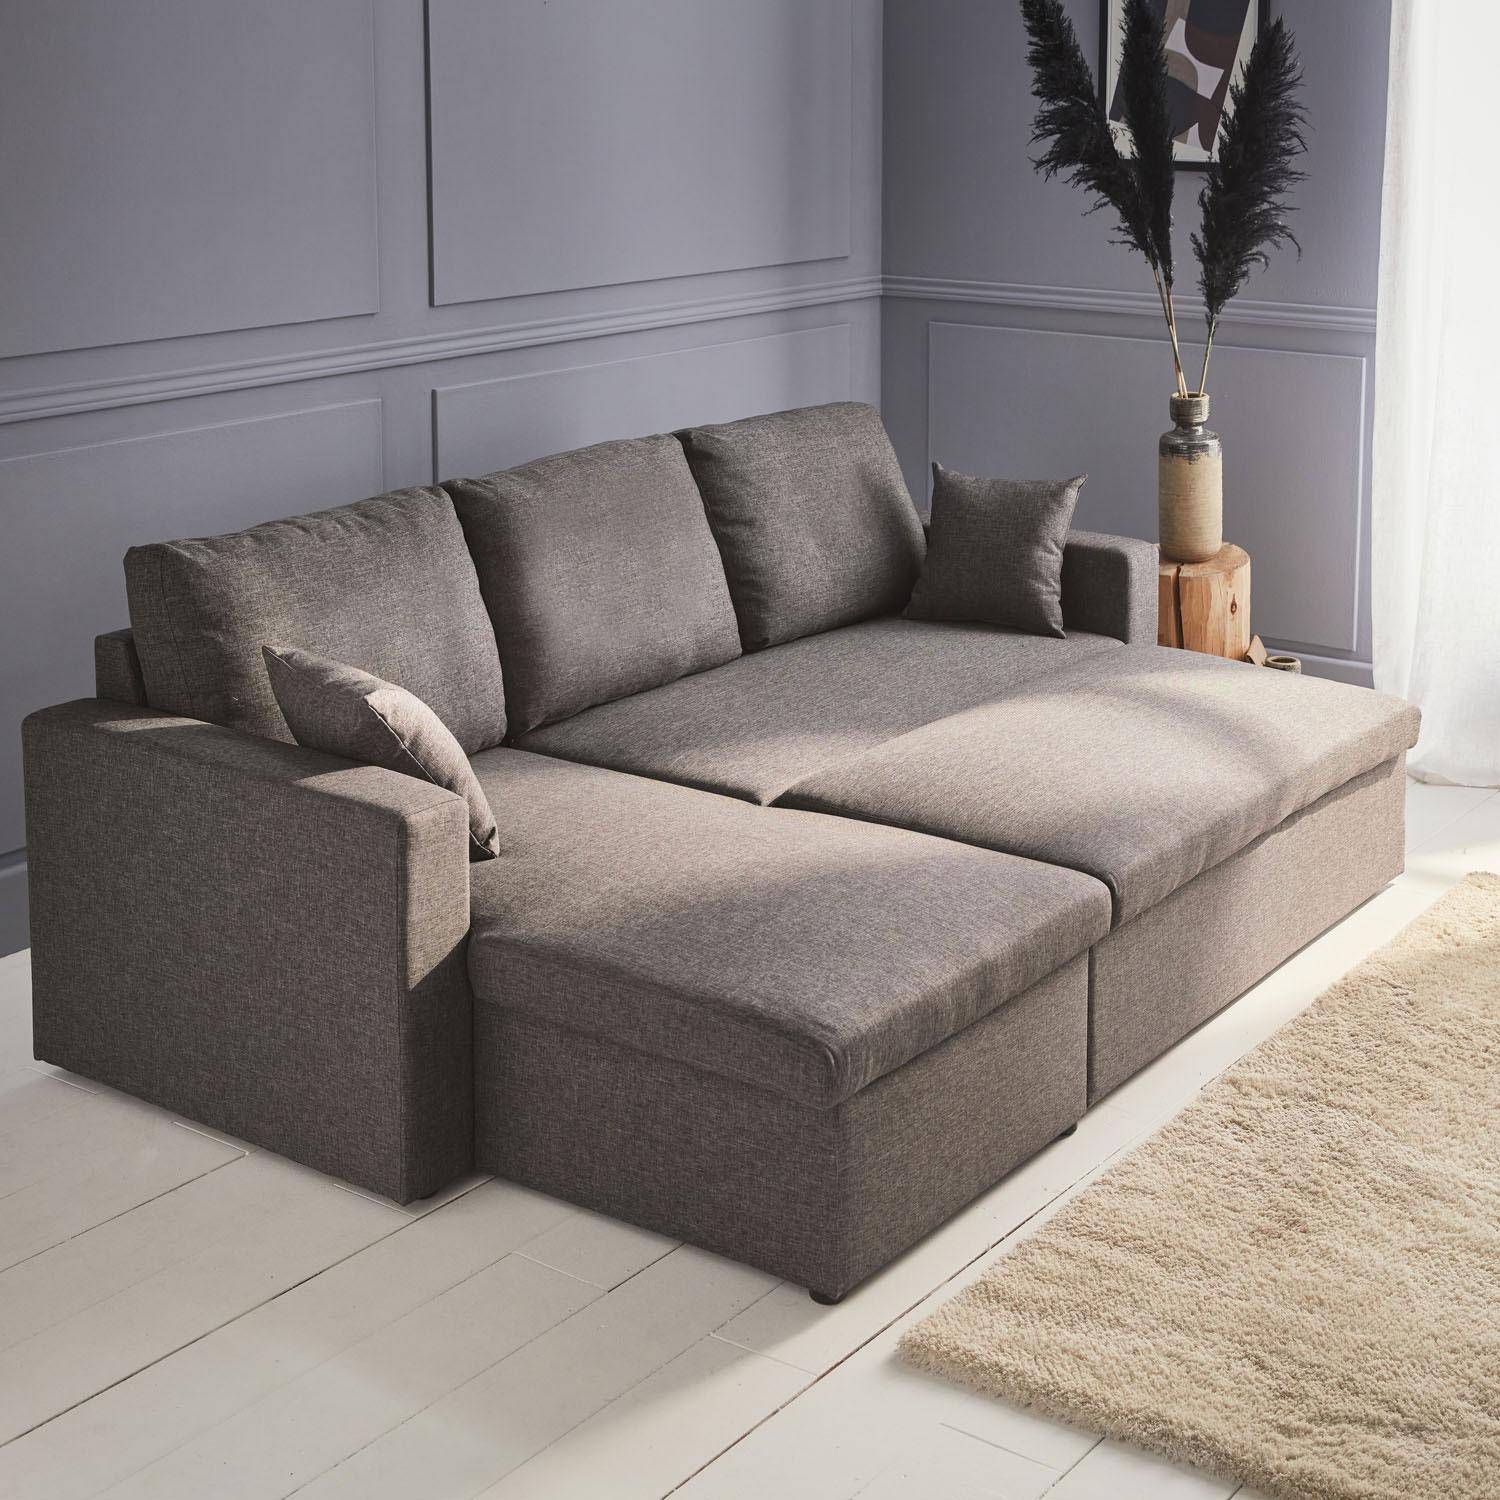 3-seater reversible grey corner sofa bed with storage box, : L219xD81xH68cm, IDA Photo2